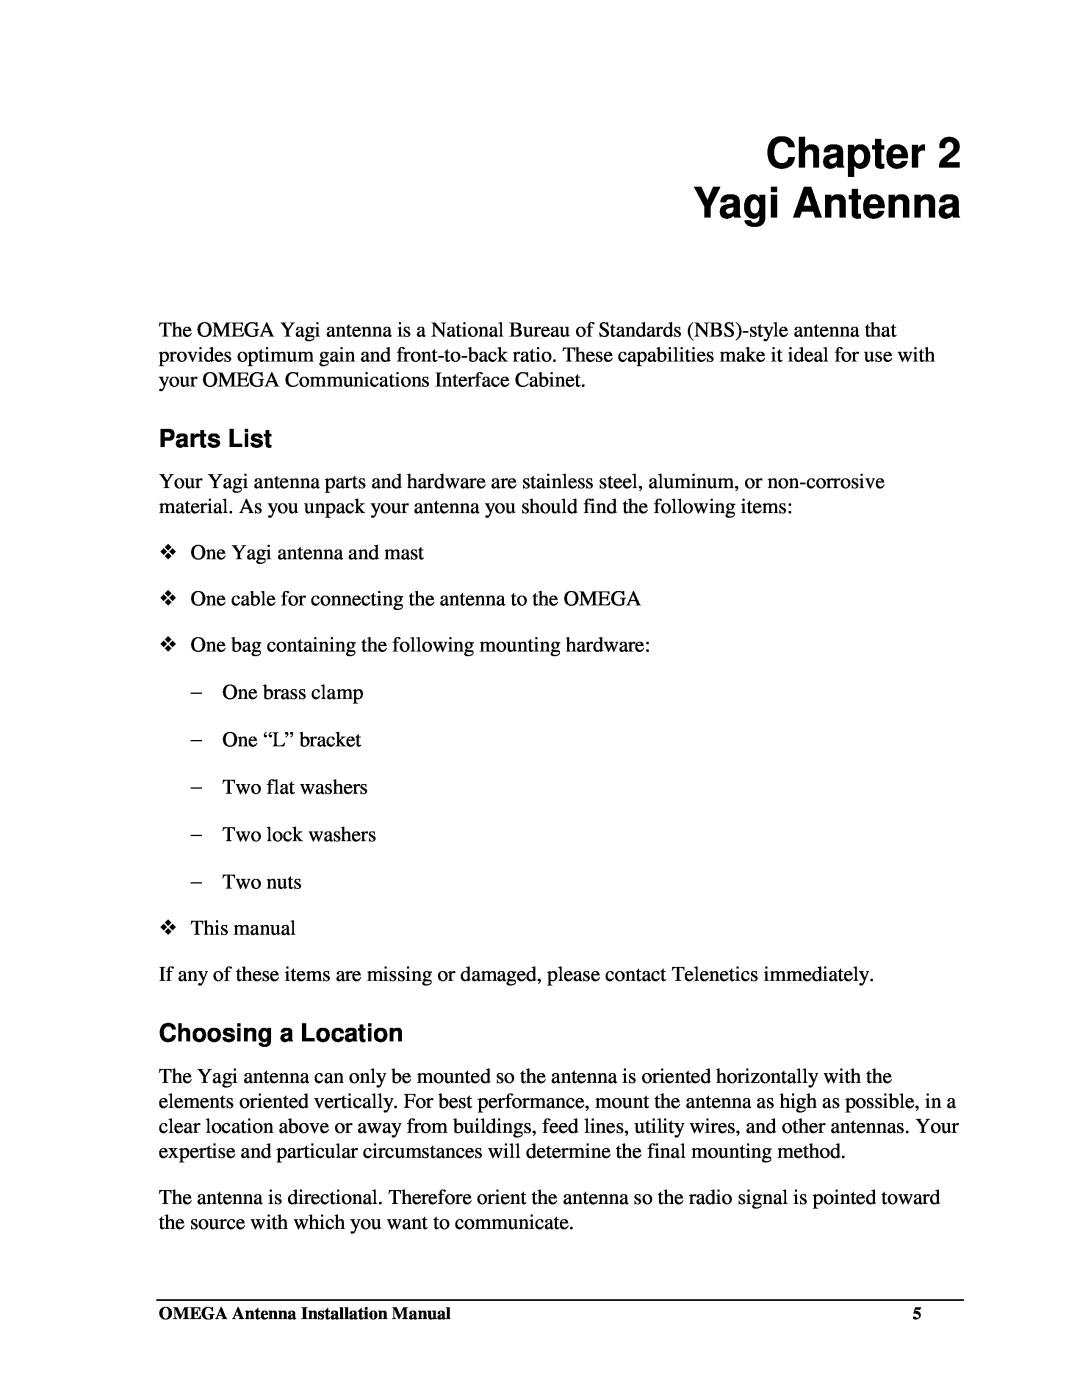 Telenetics Communications and Interface Cabinet Antenna Chapter Yagi Antenna, Parts List, Choosing a Location 